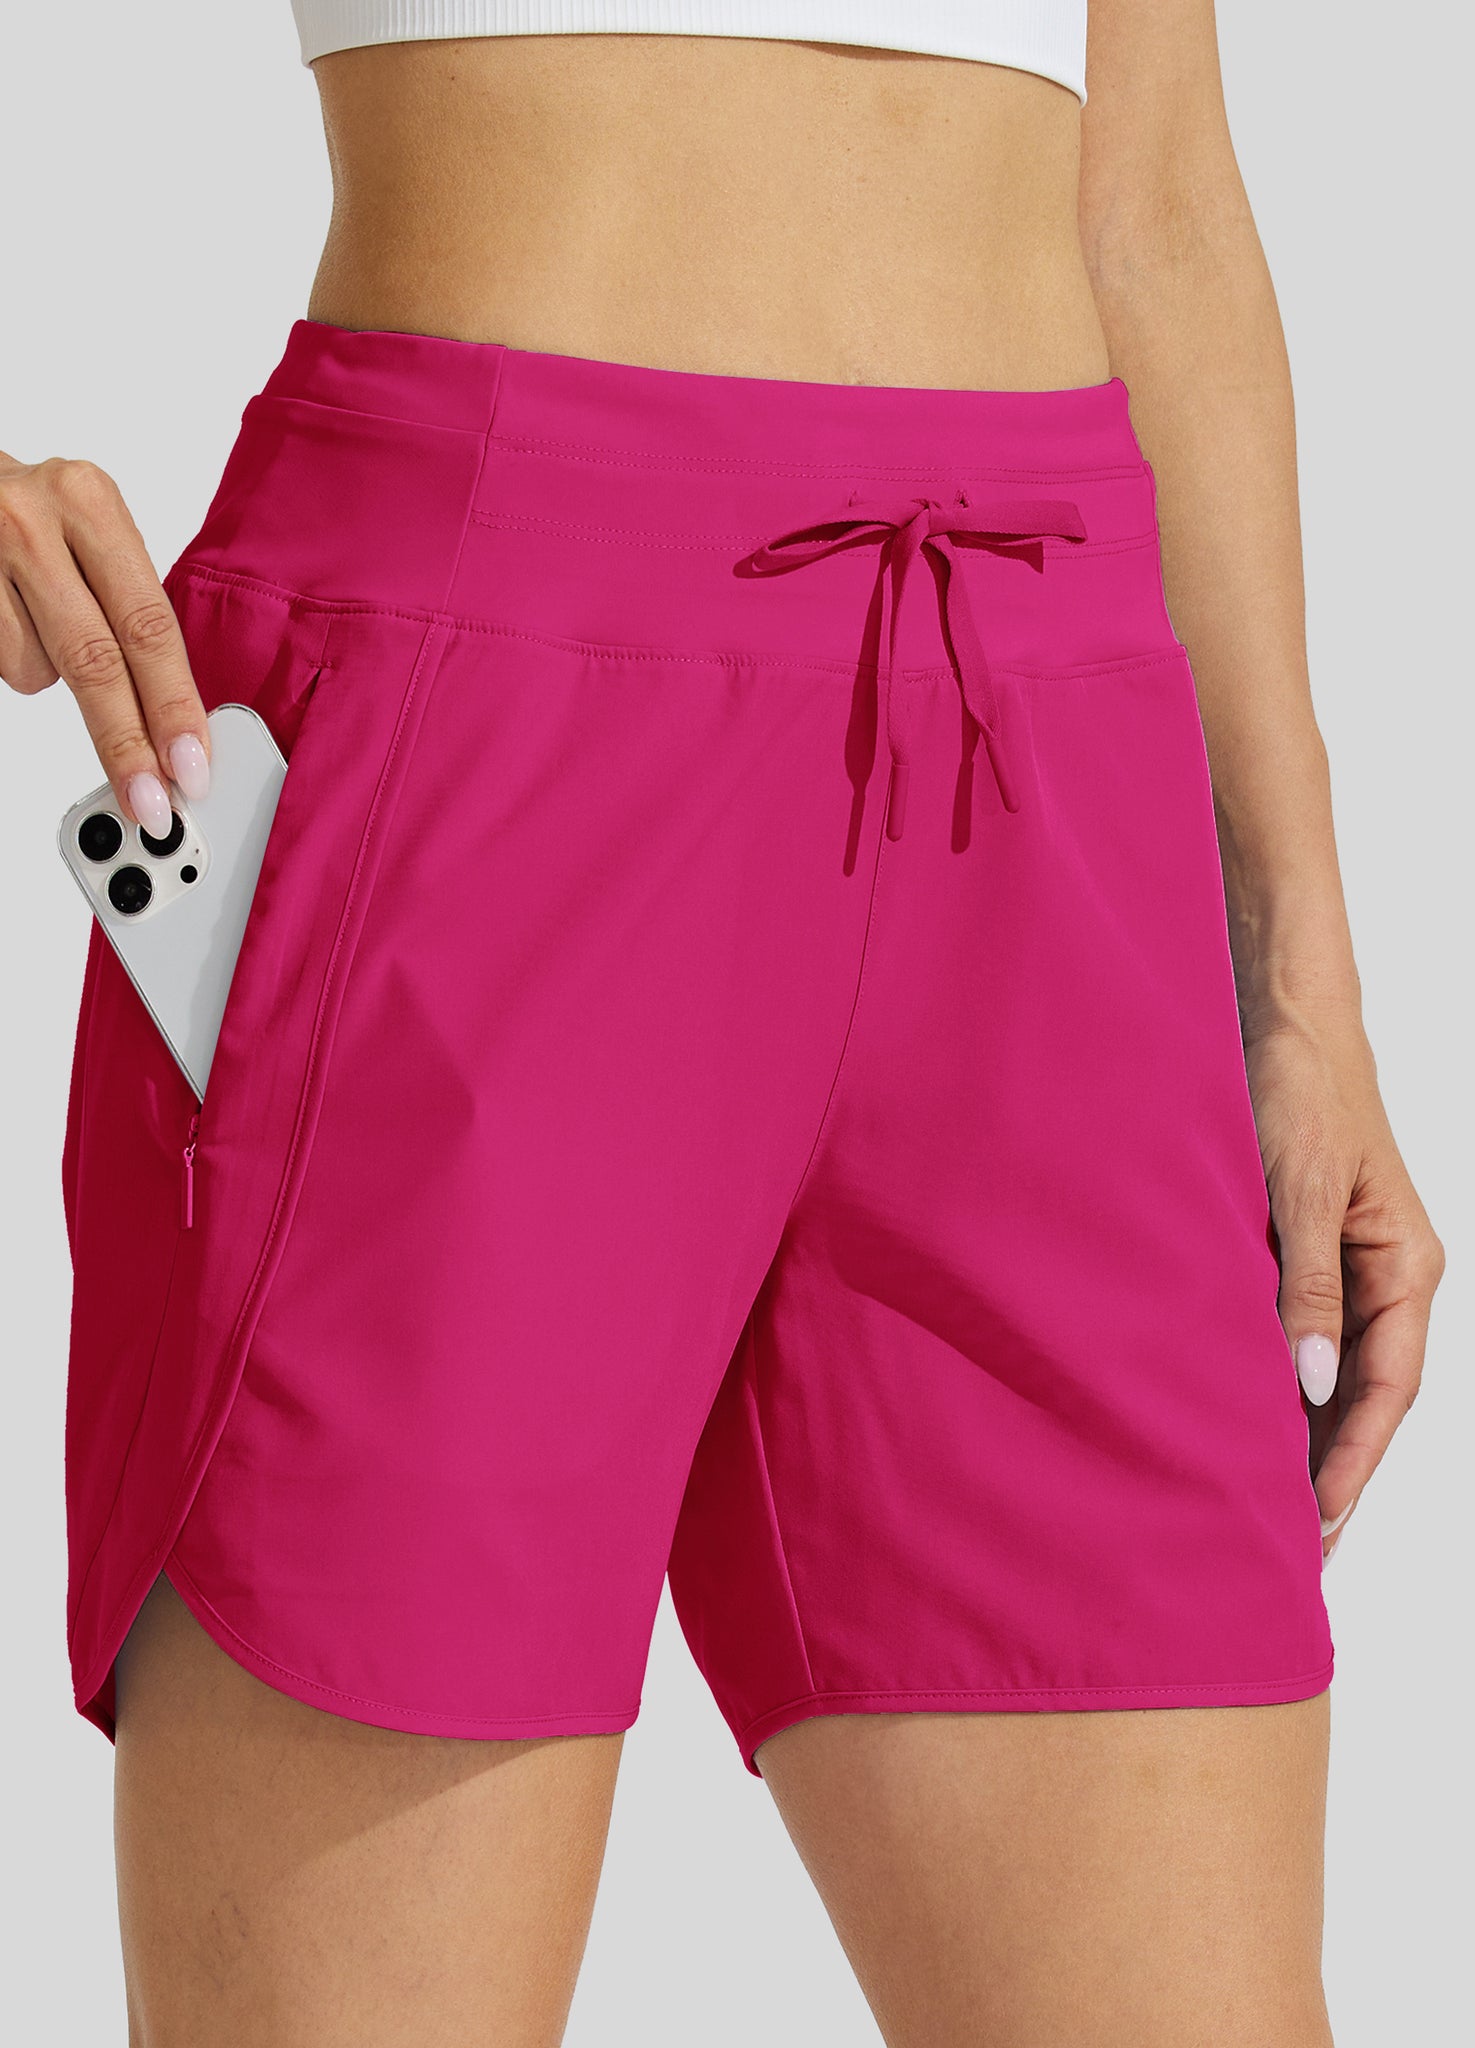 Women's Active 5 Inseam Utility Shorts